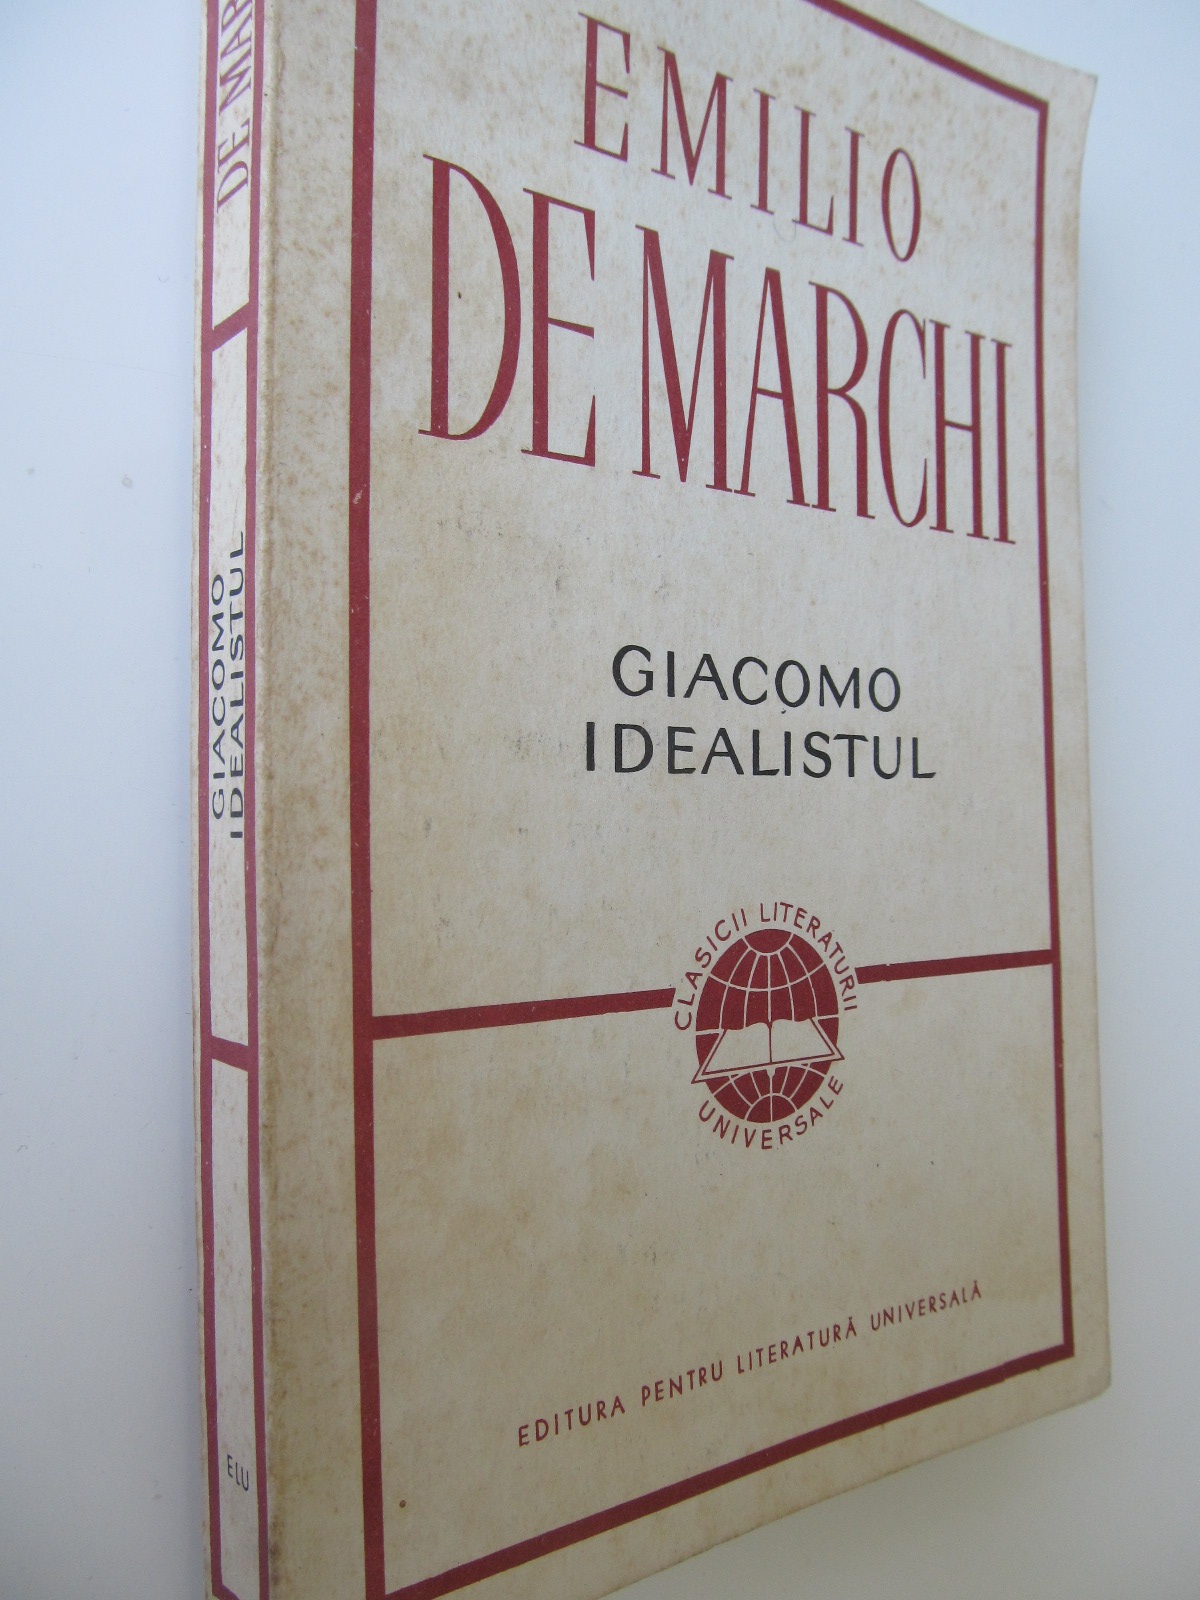 Giacomo idealistul - Emilio De Marchi | Detalii carte